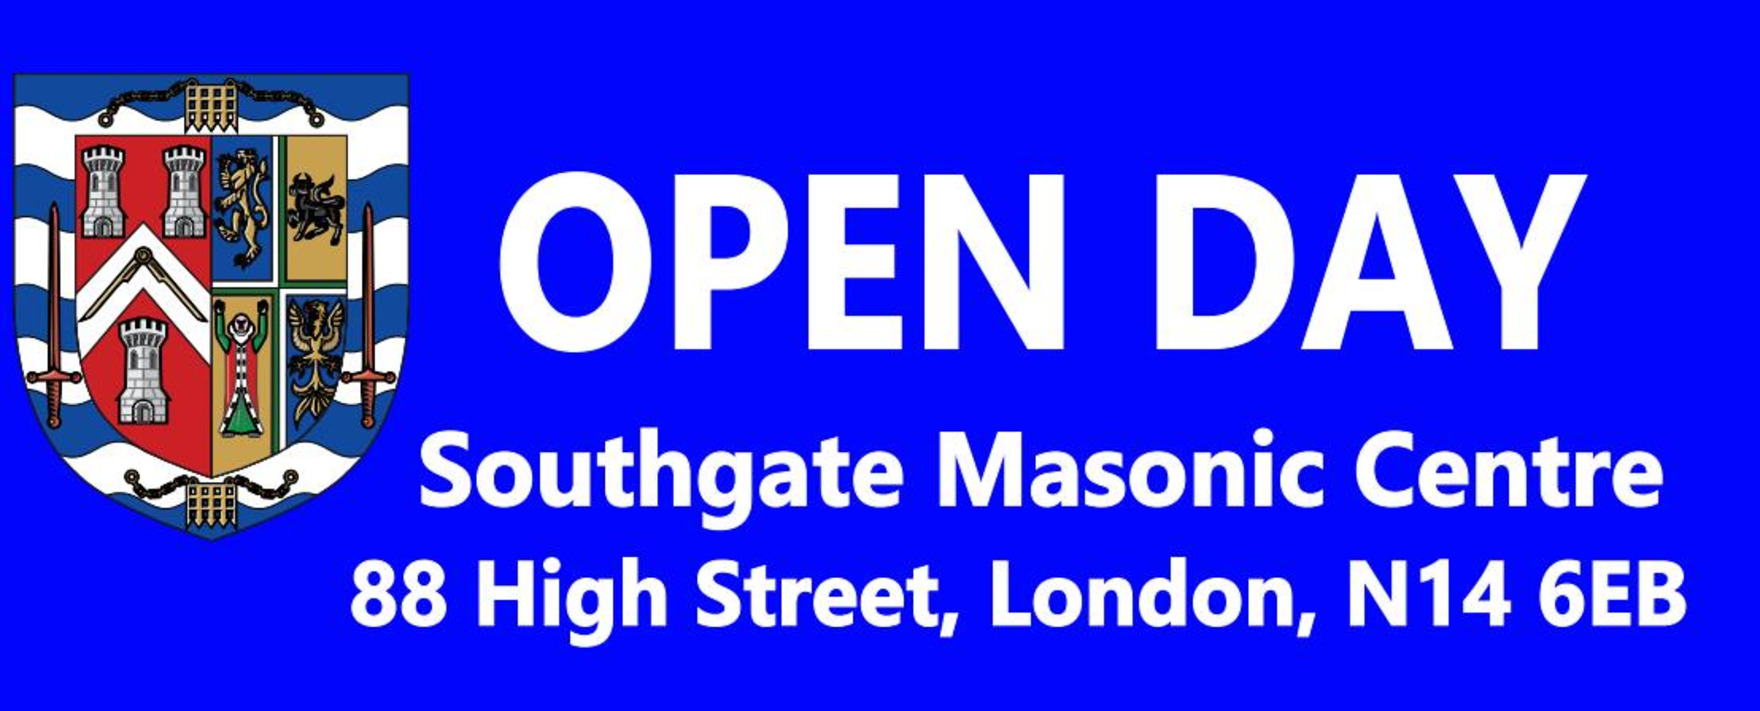 Southgate Masonic Centre Open Day